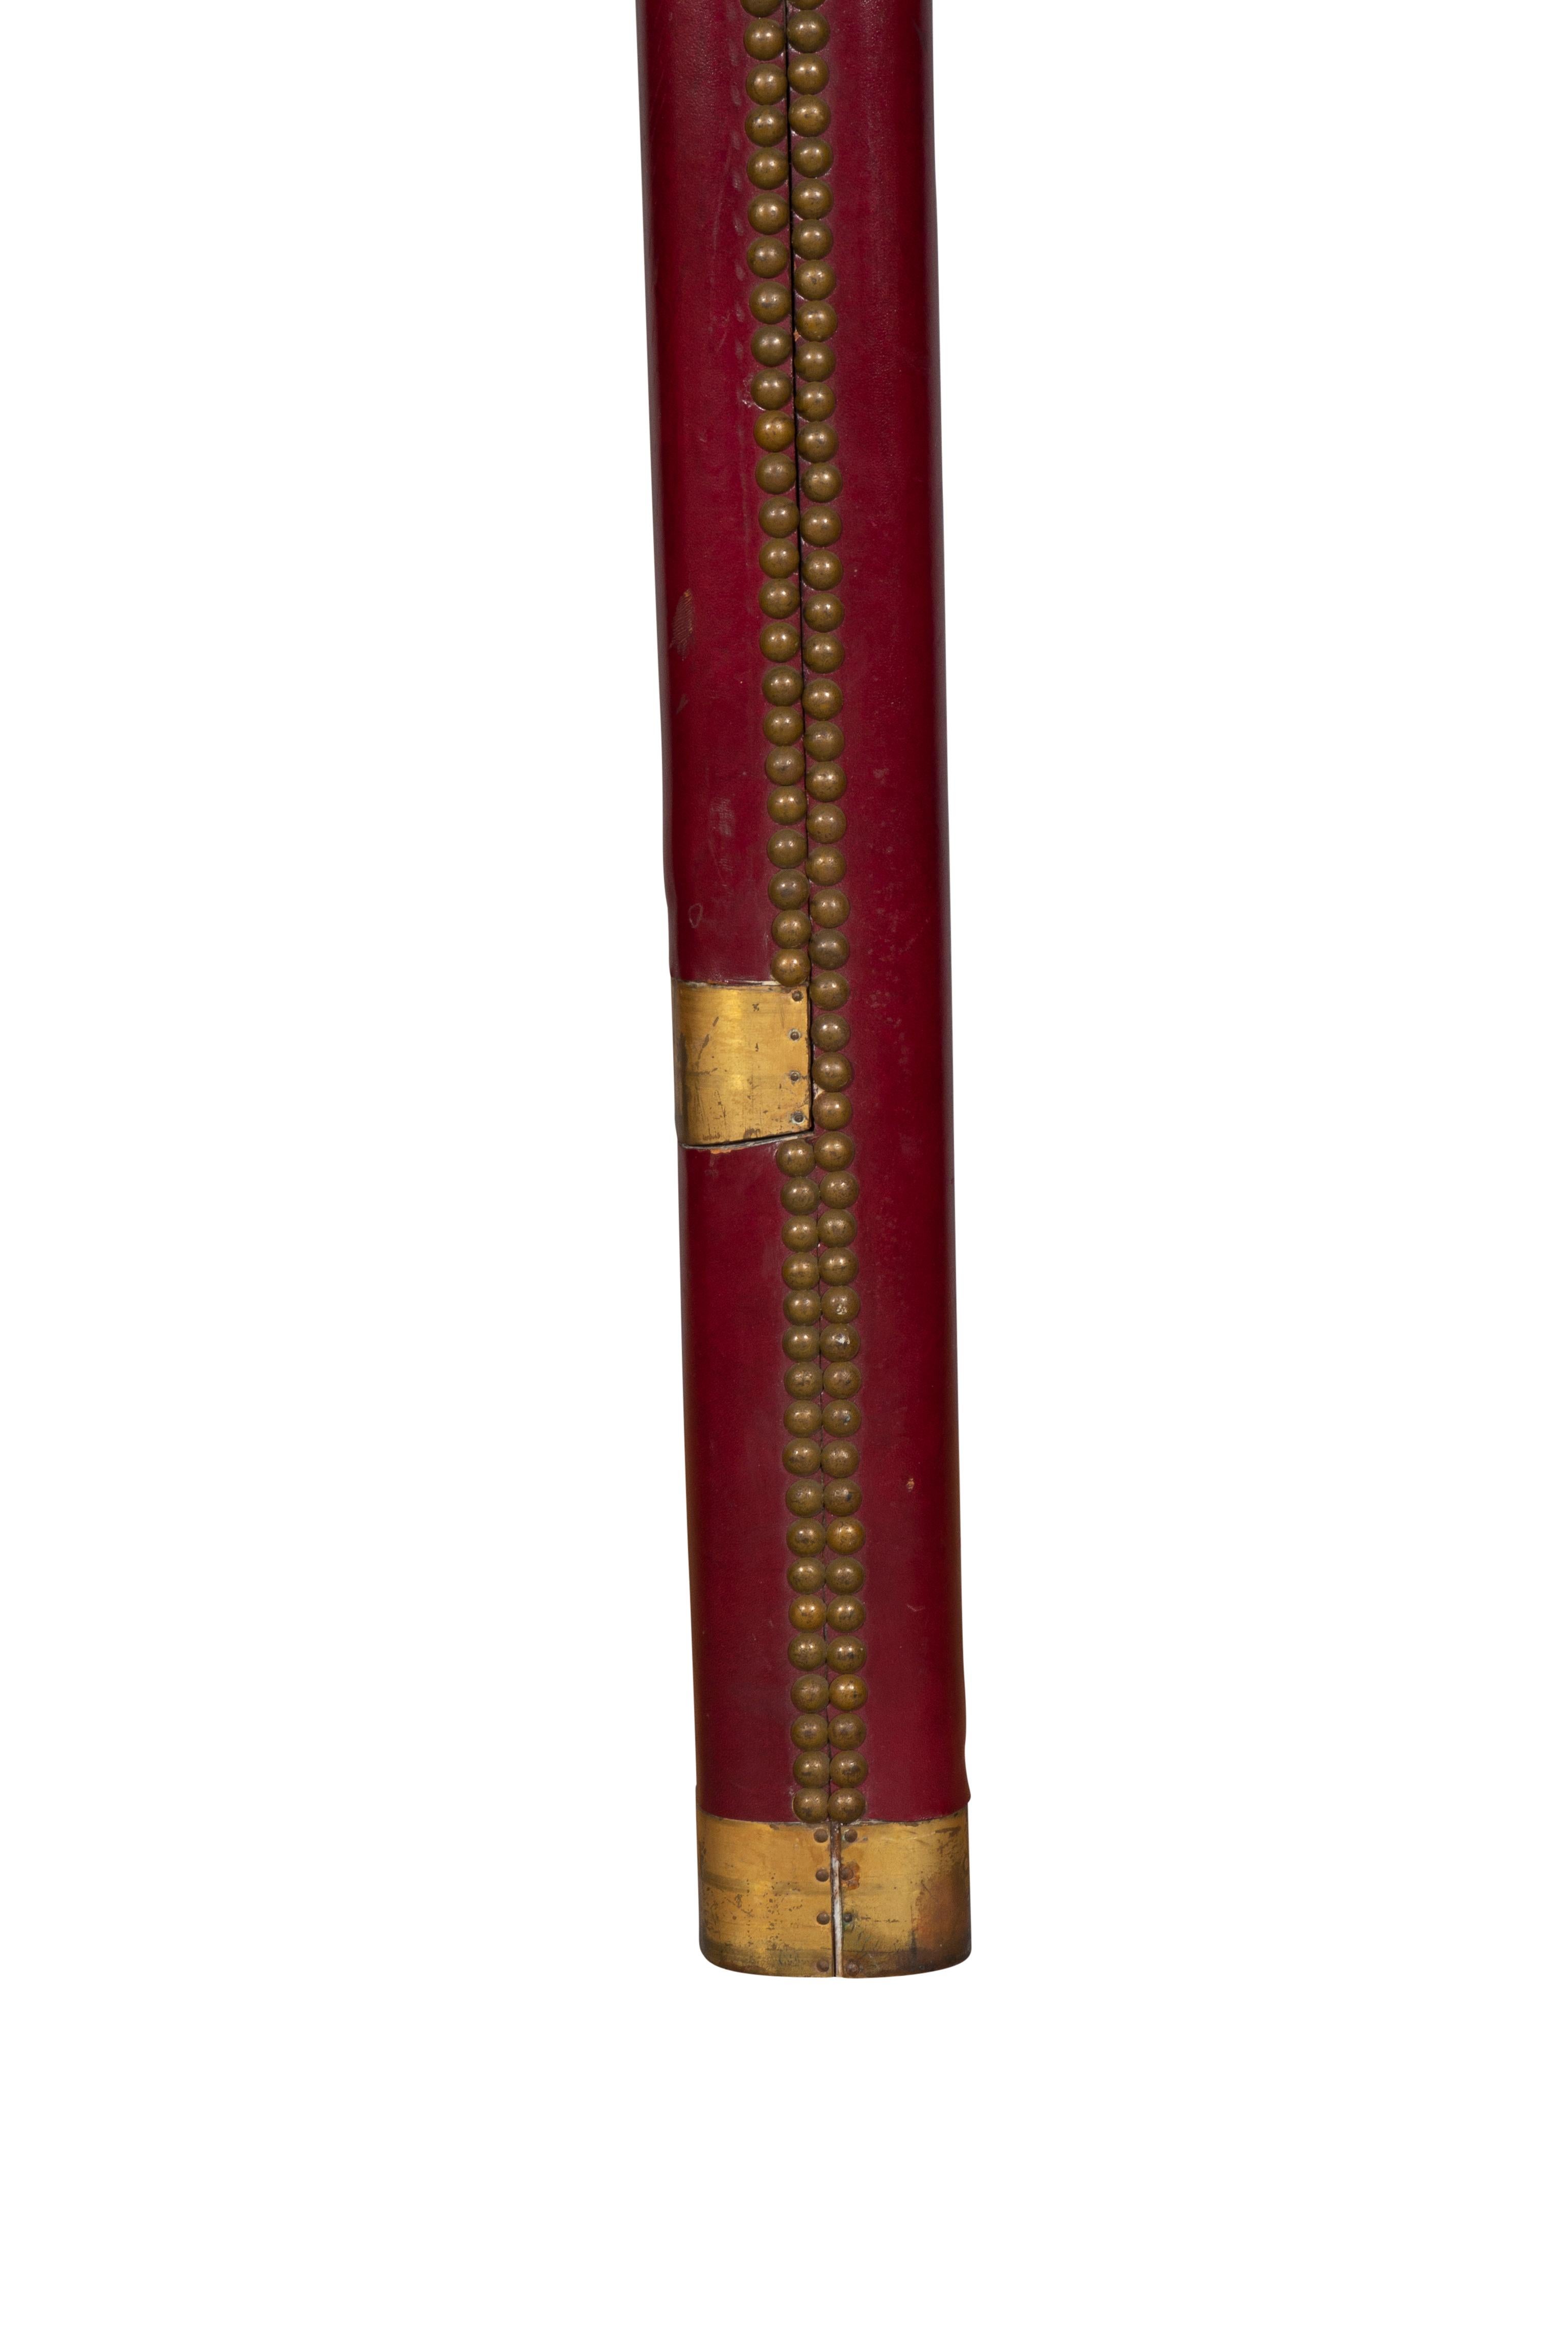 Regency English Leather Folding Stick Ladder For Sale